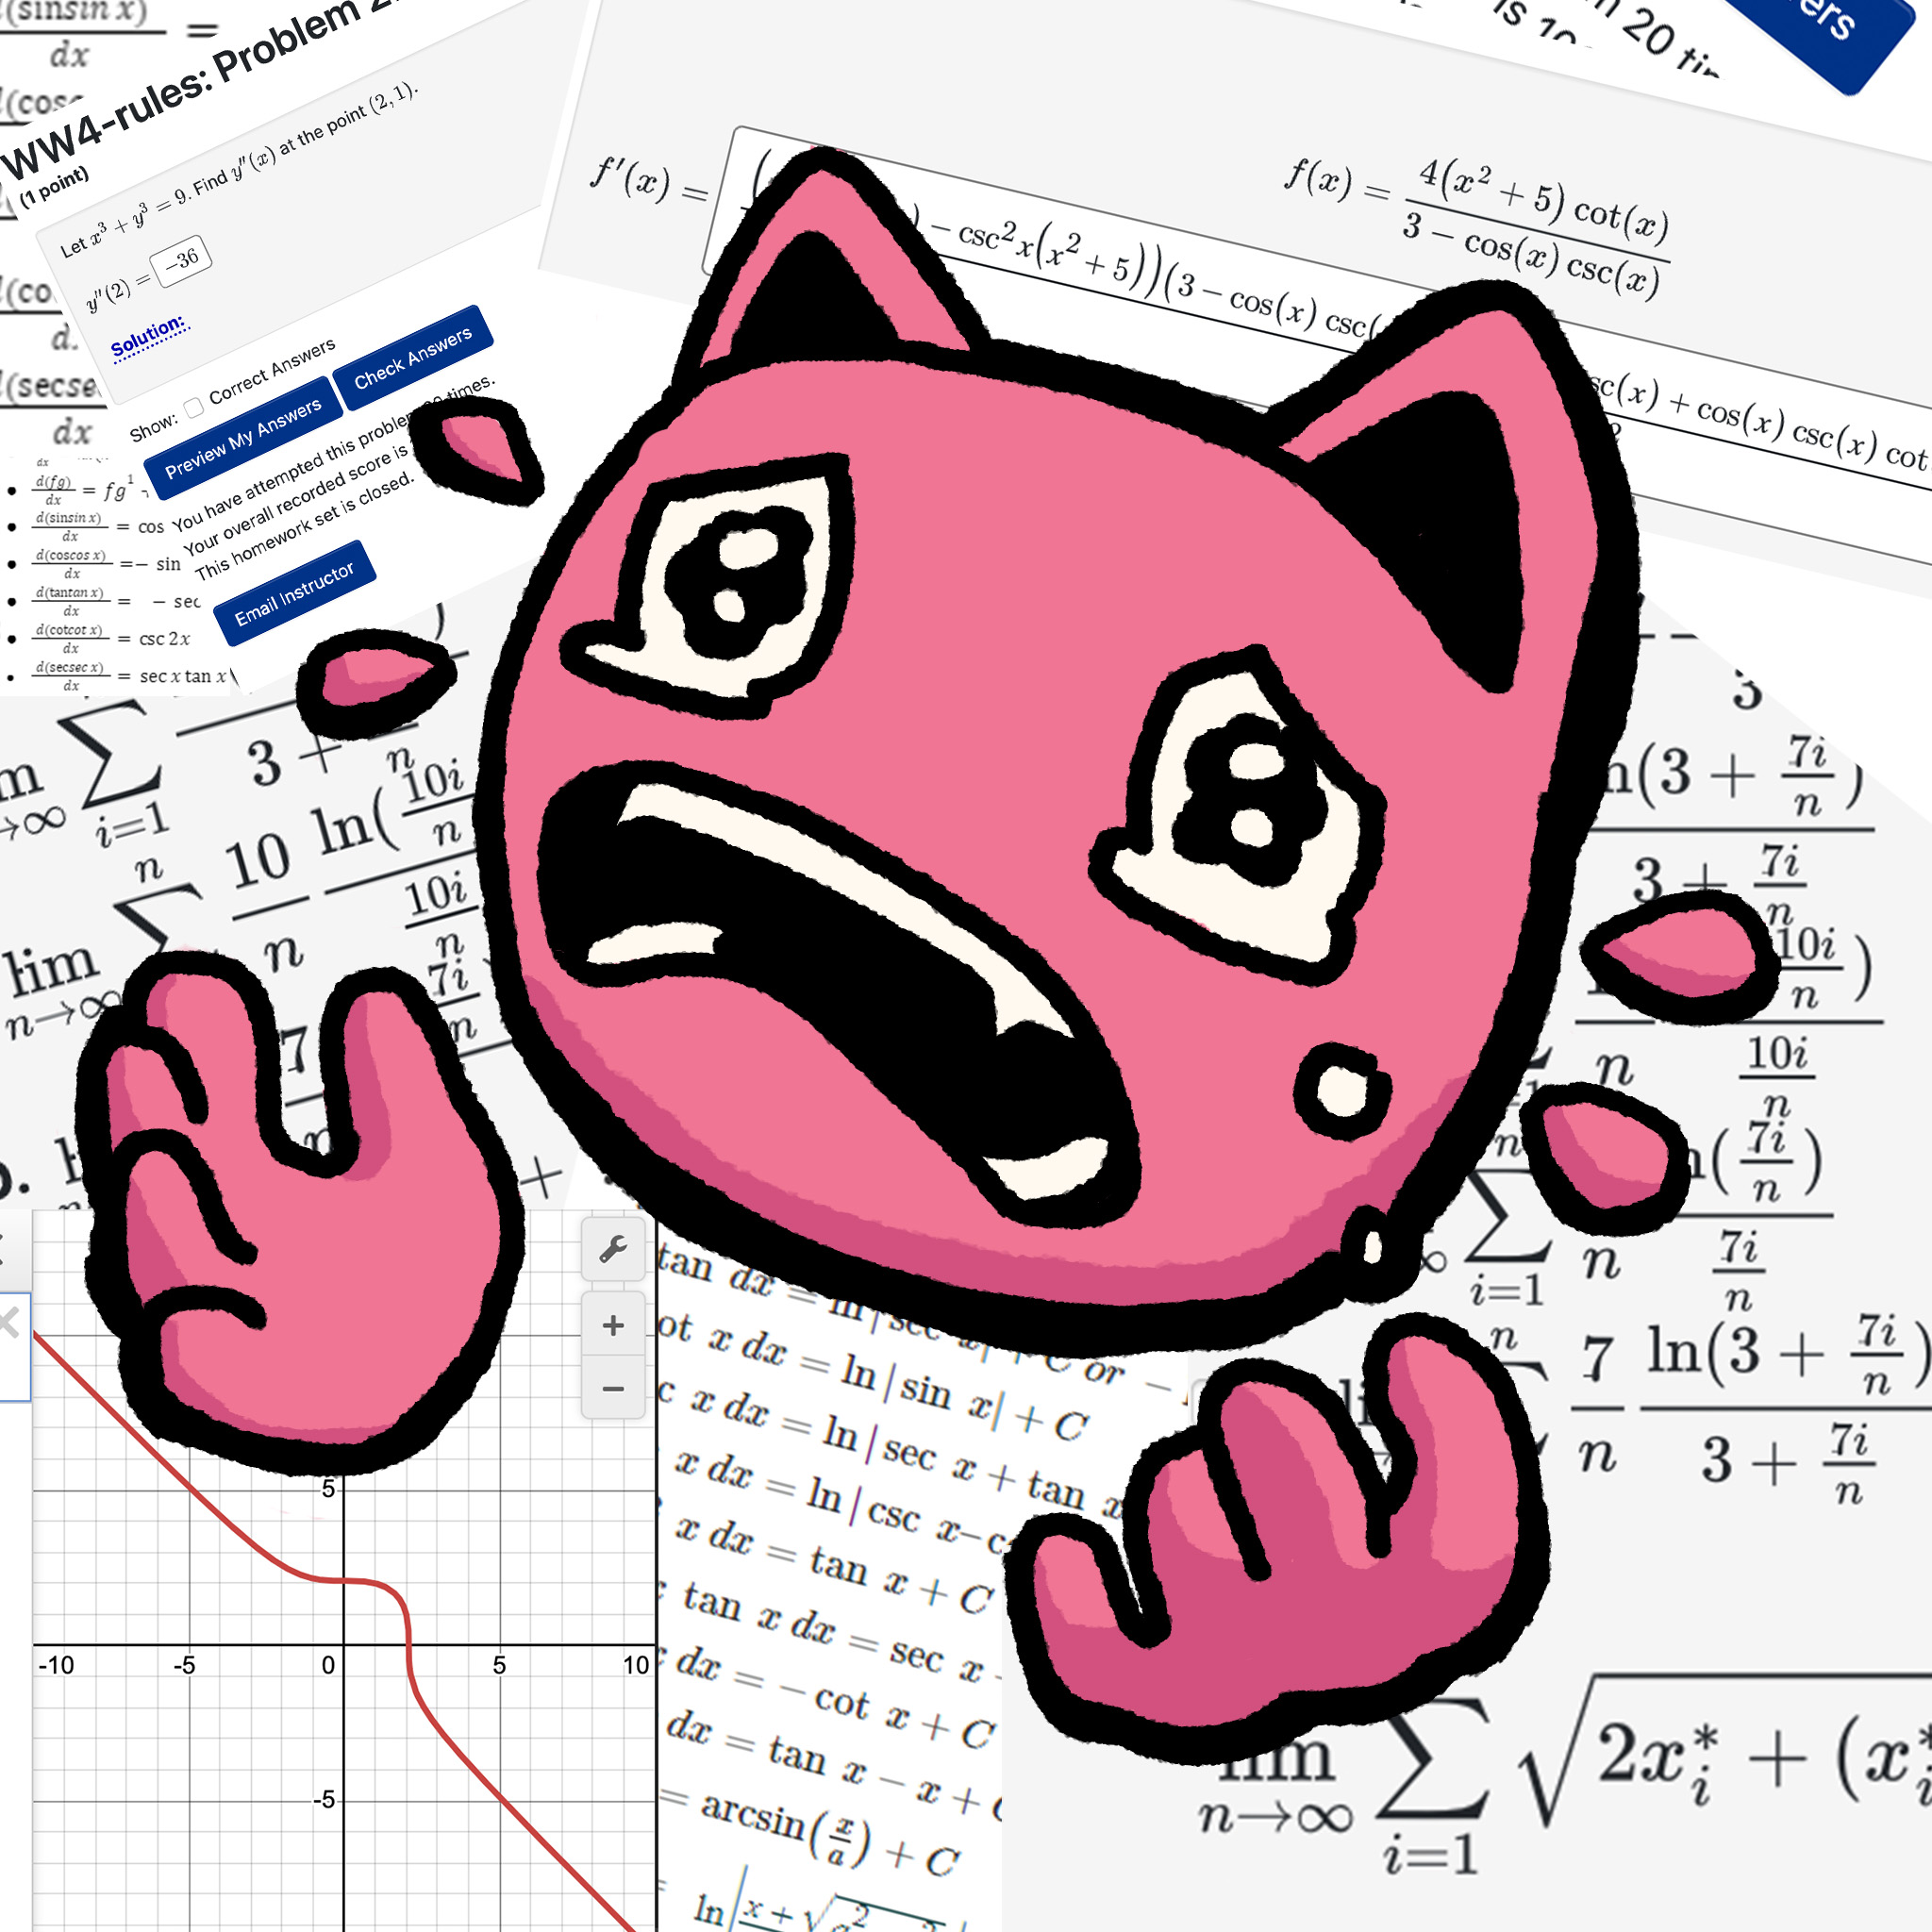 Pnk cat despairing over math problems